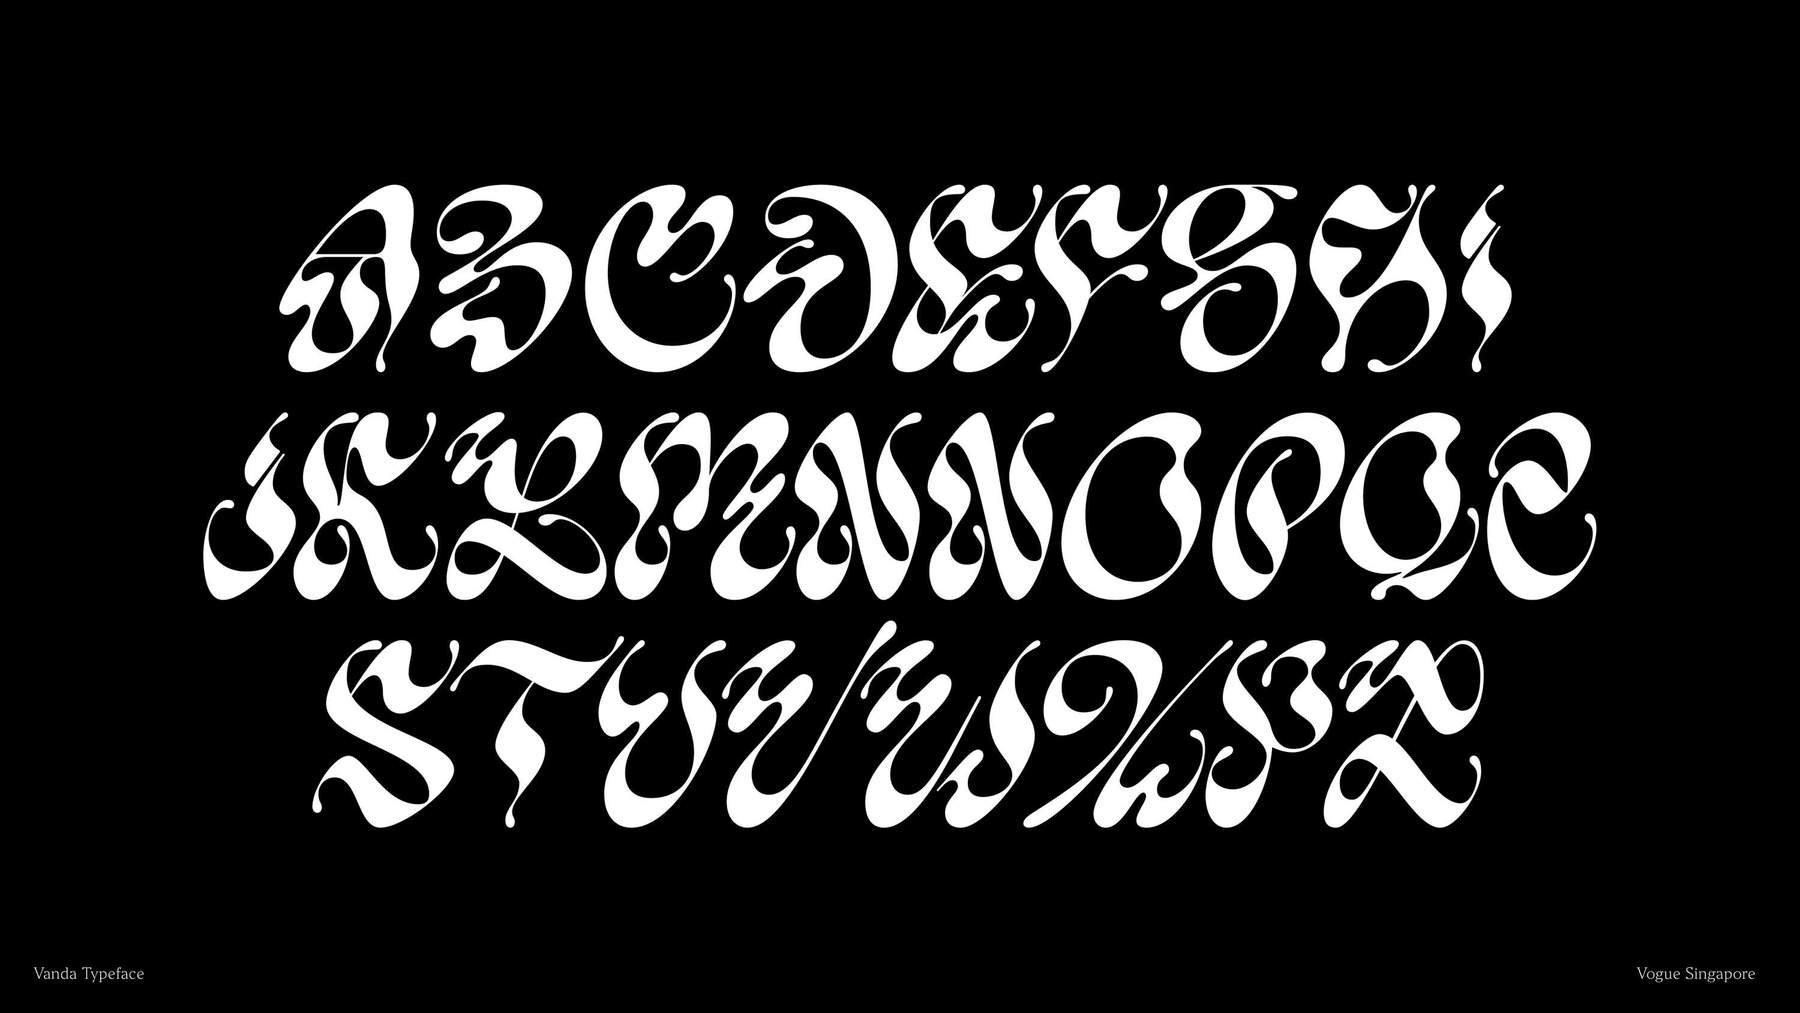 Vanda Typeface by Margot Lévêque